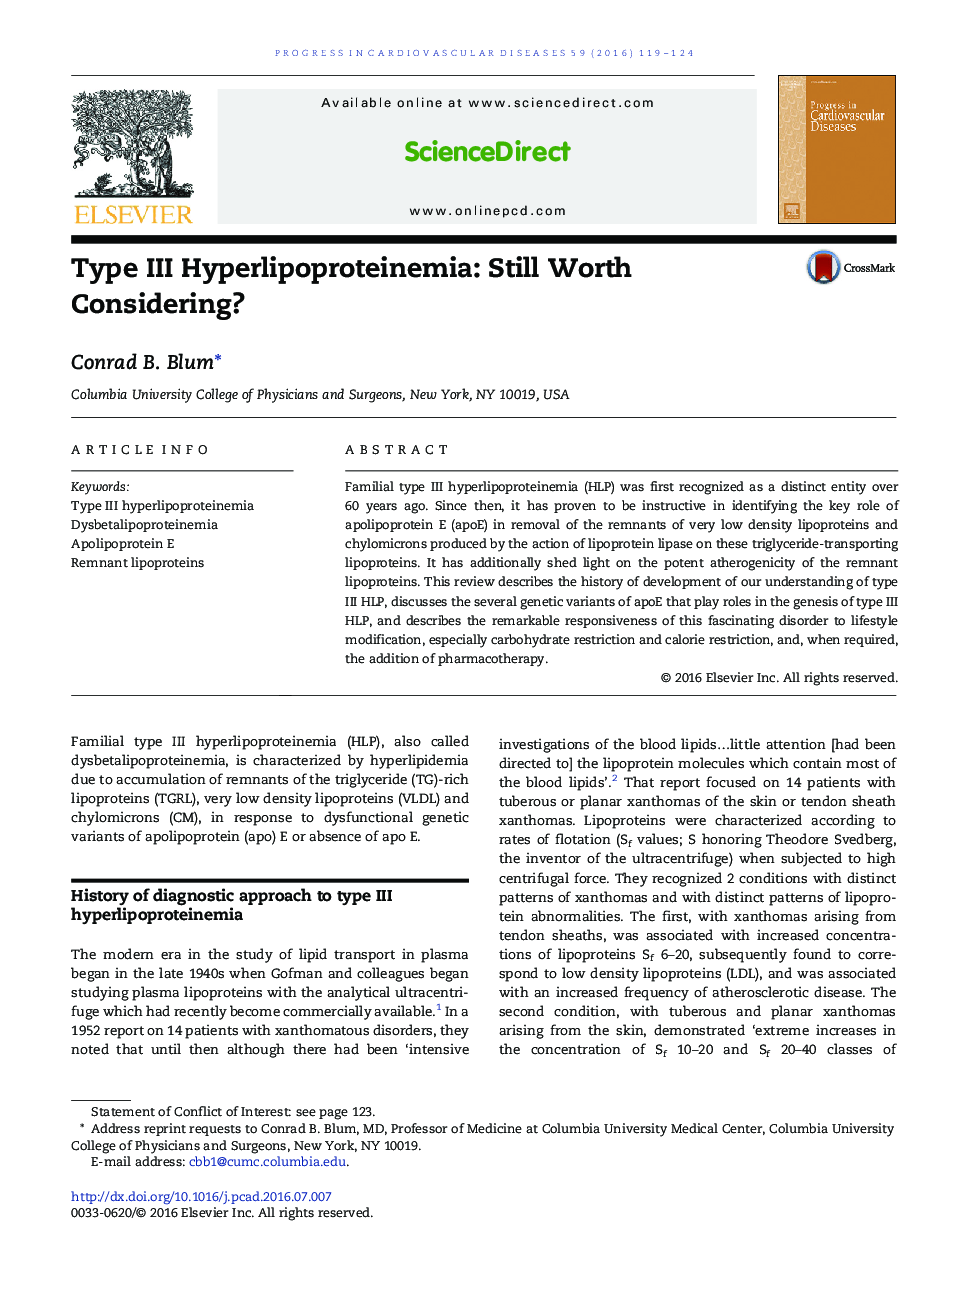 Type III Hyperlipoproteinemia: Still Worth Considering?